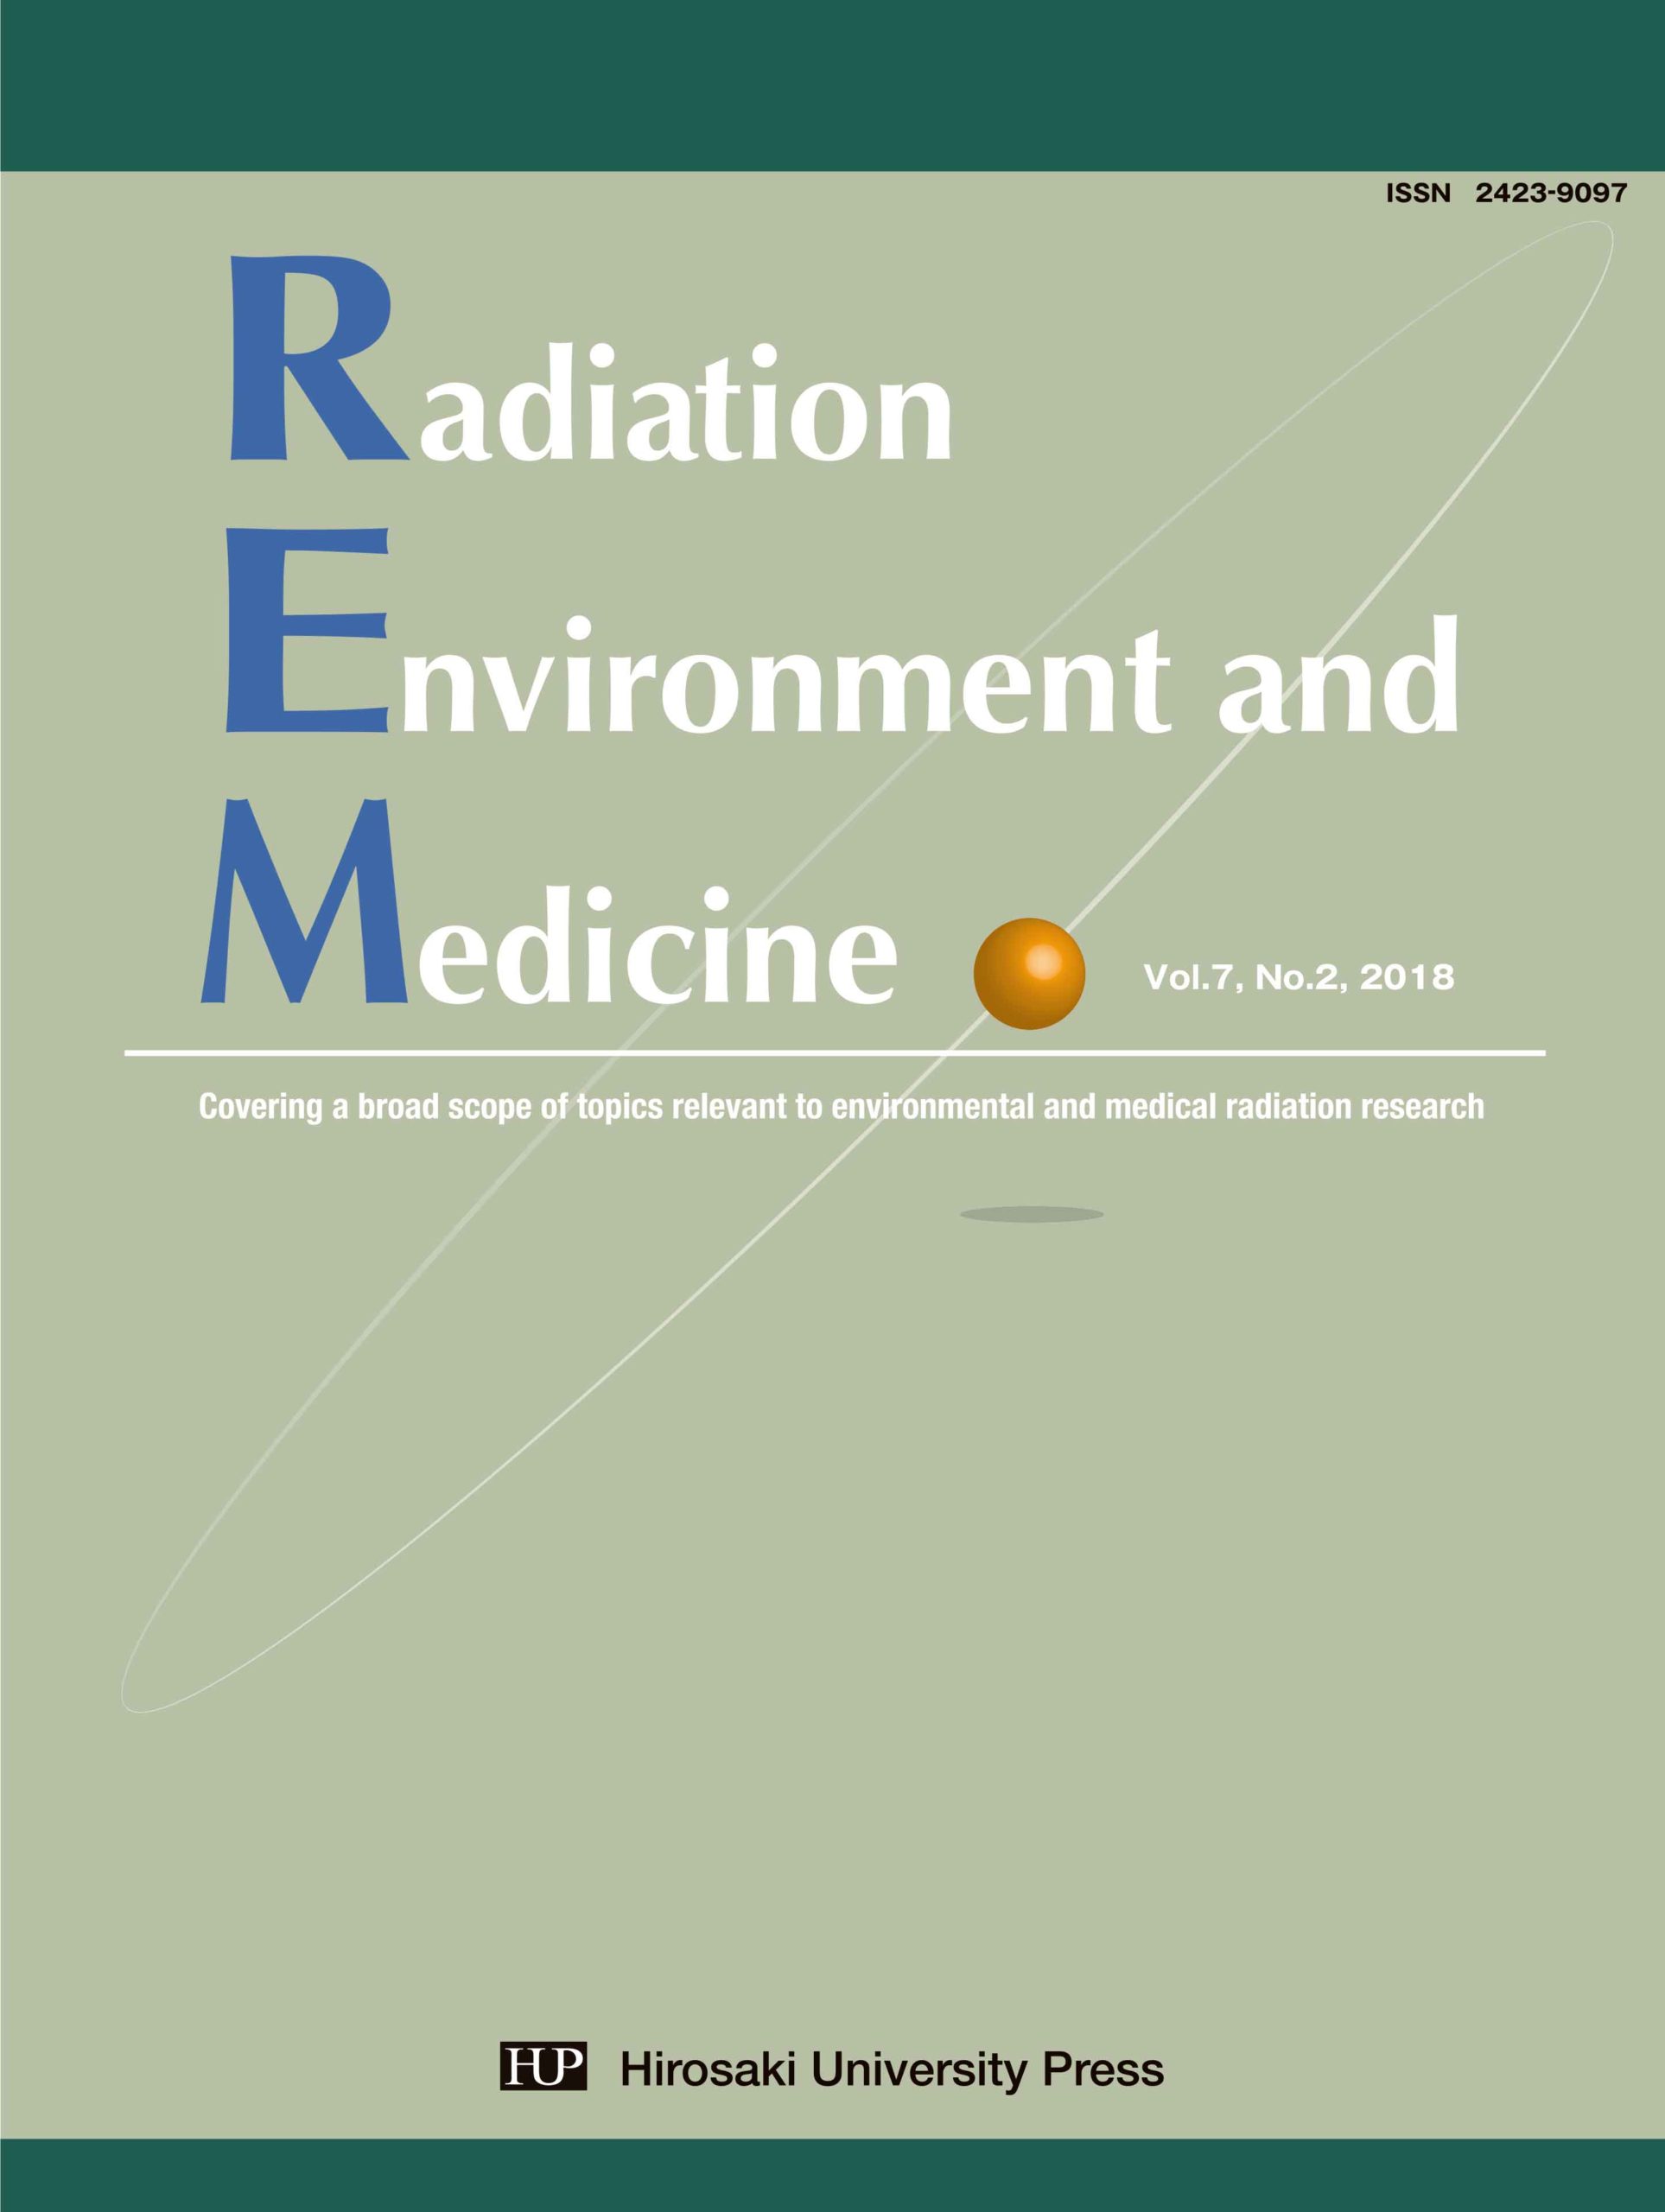 Radiation Environment and Medicine Vol.7, No.2 cover